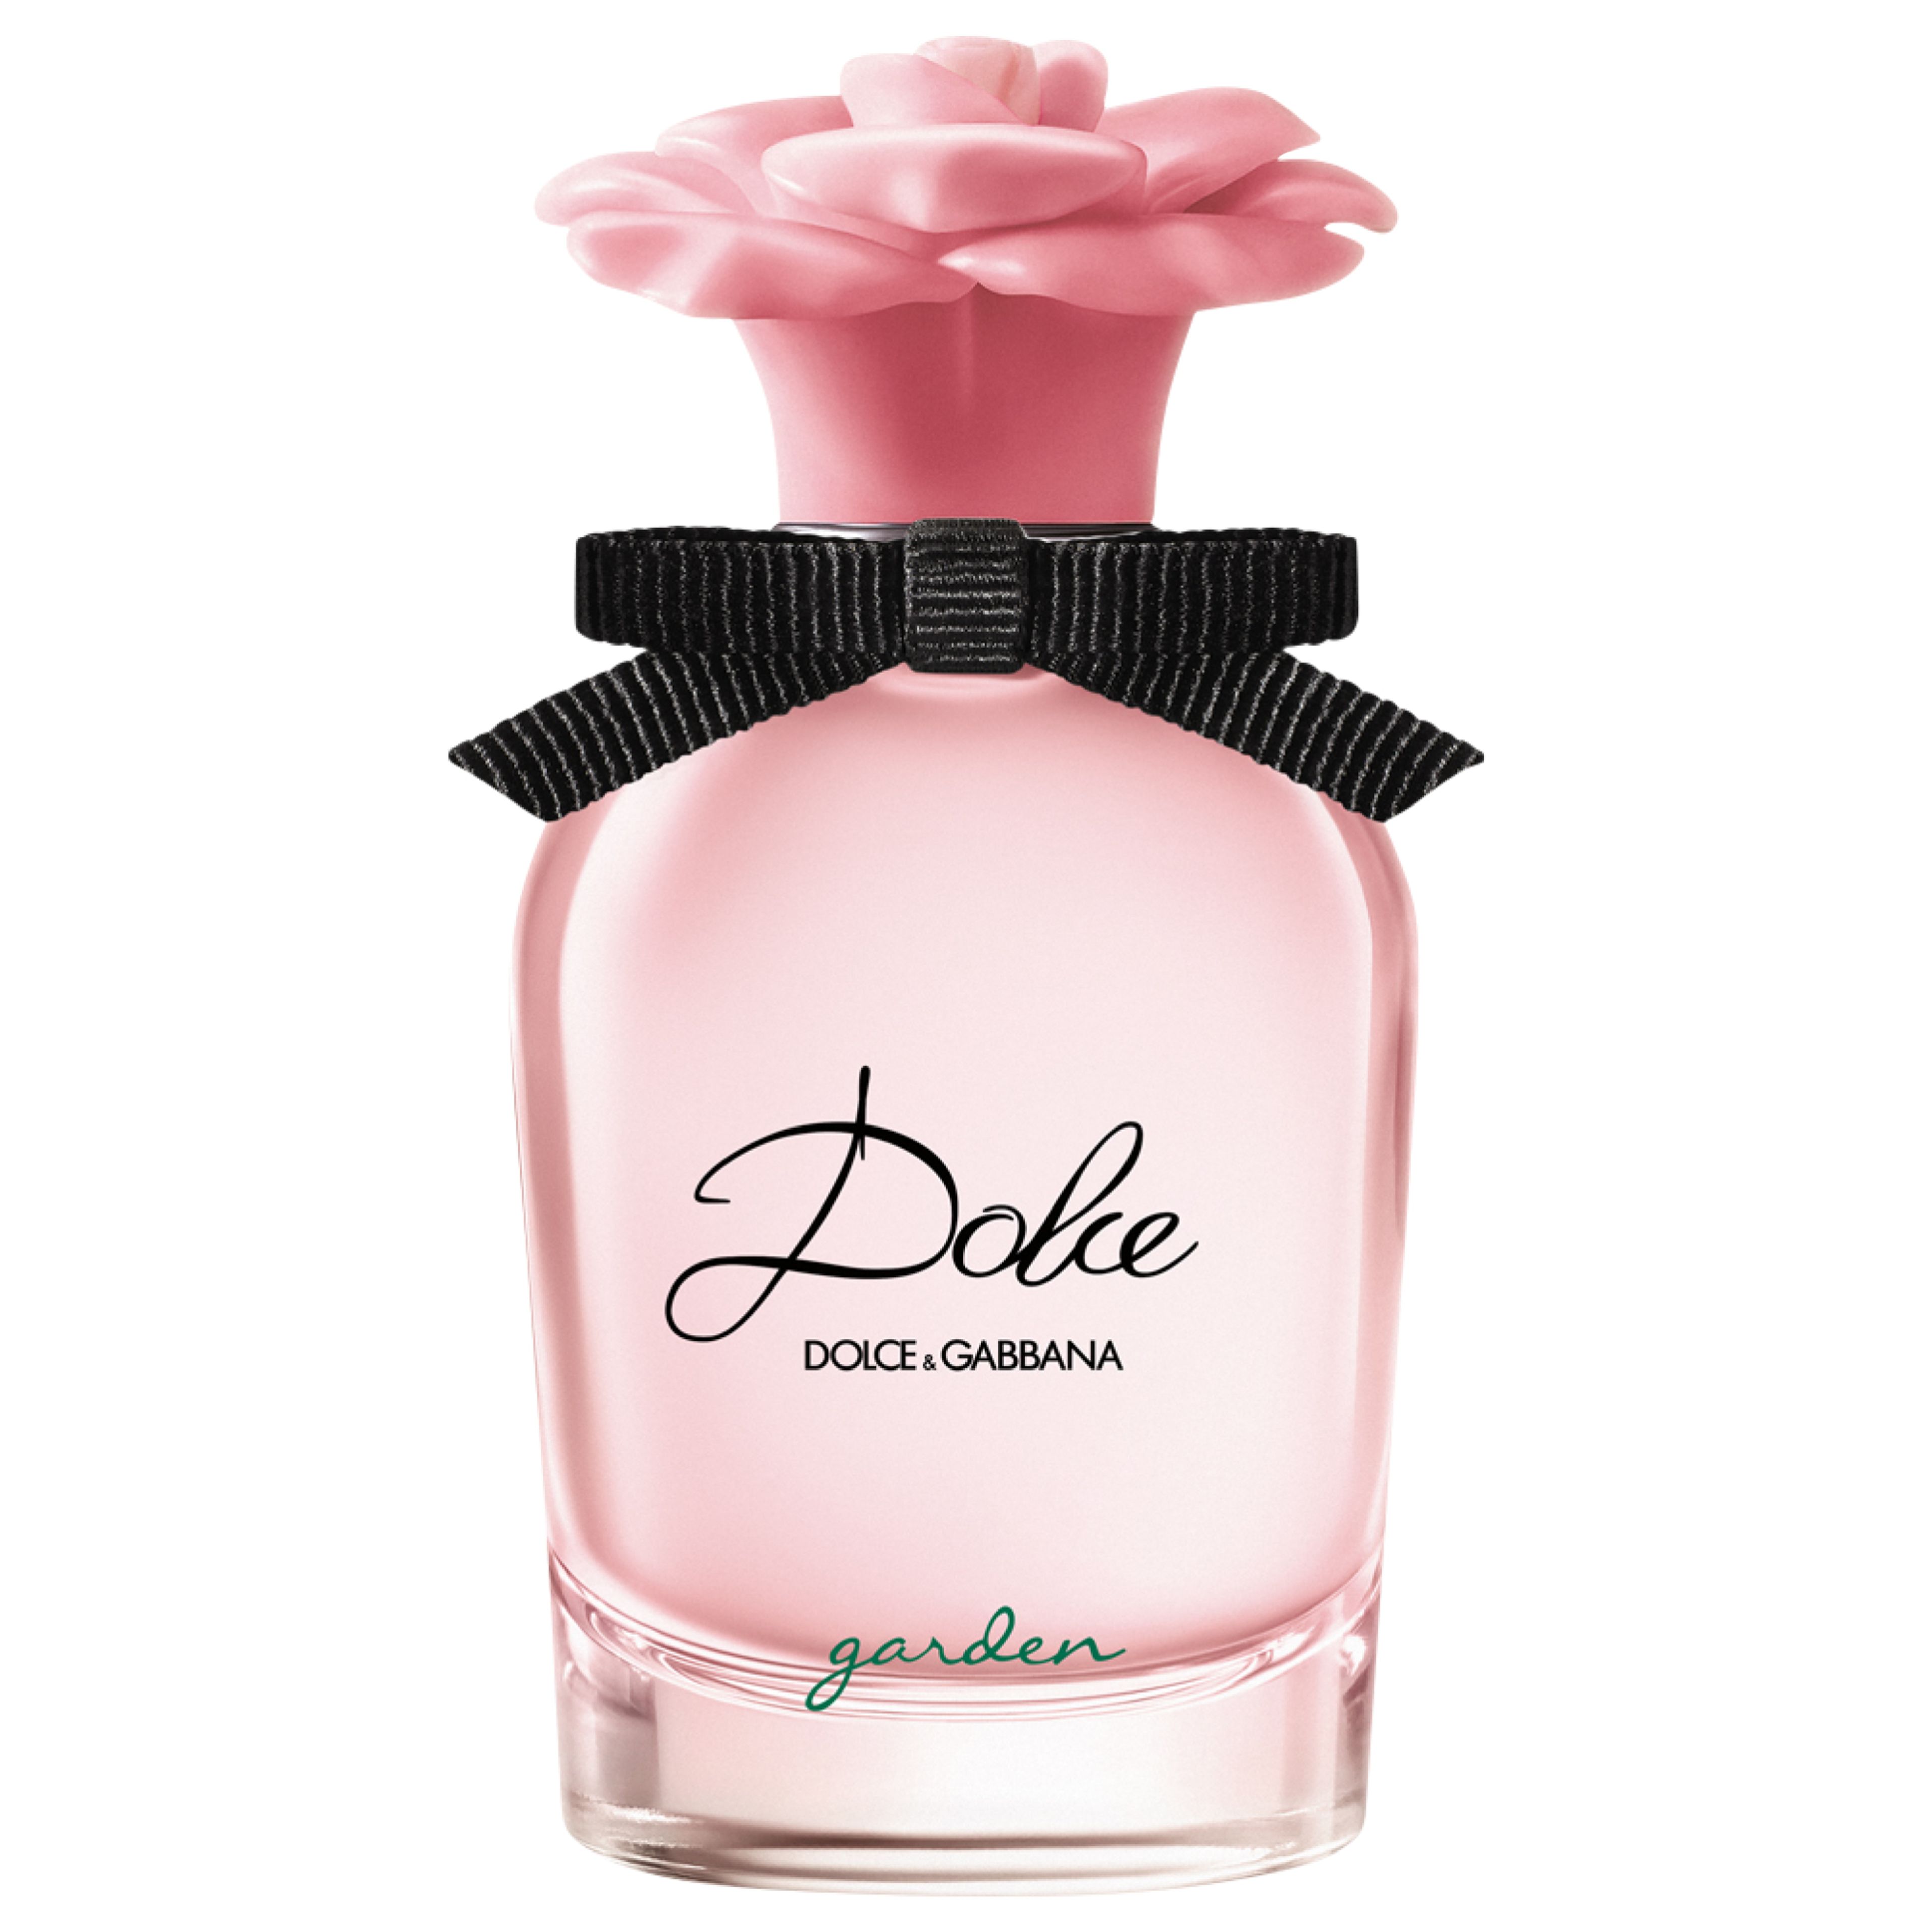 Dolce & Gabbana Dolce Garden Eau De Parfum 1